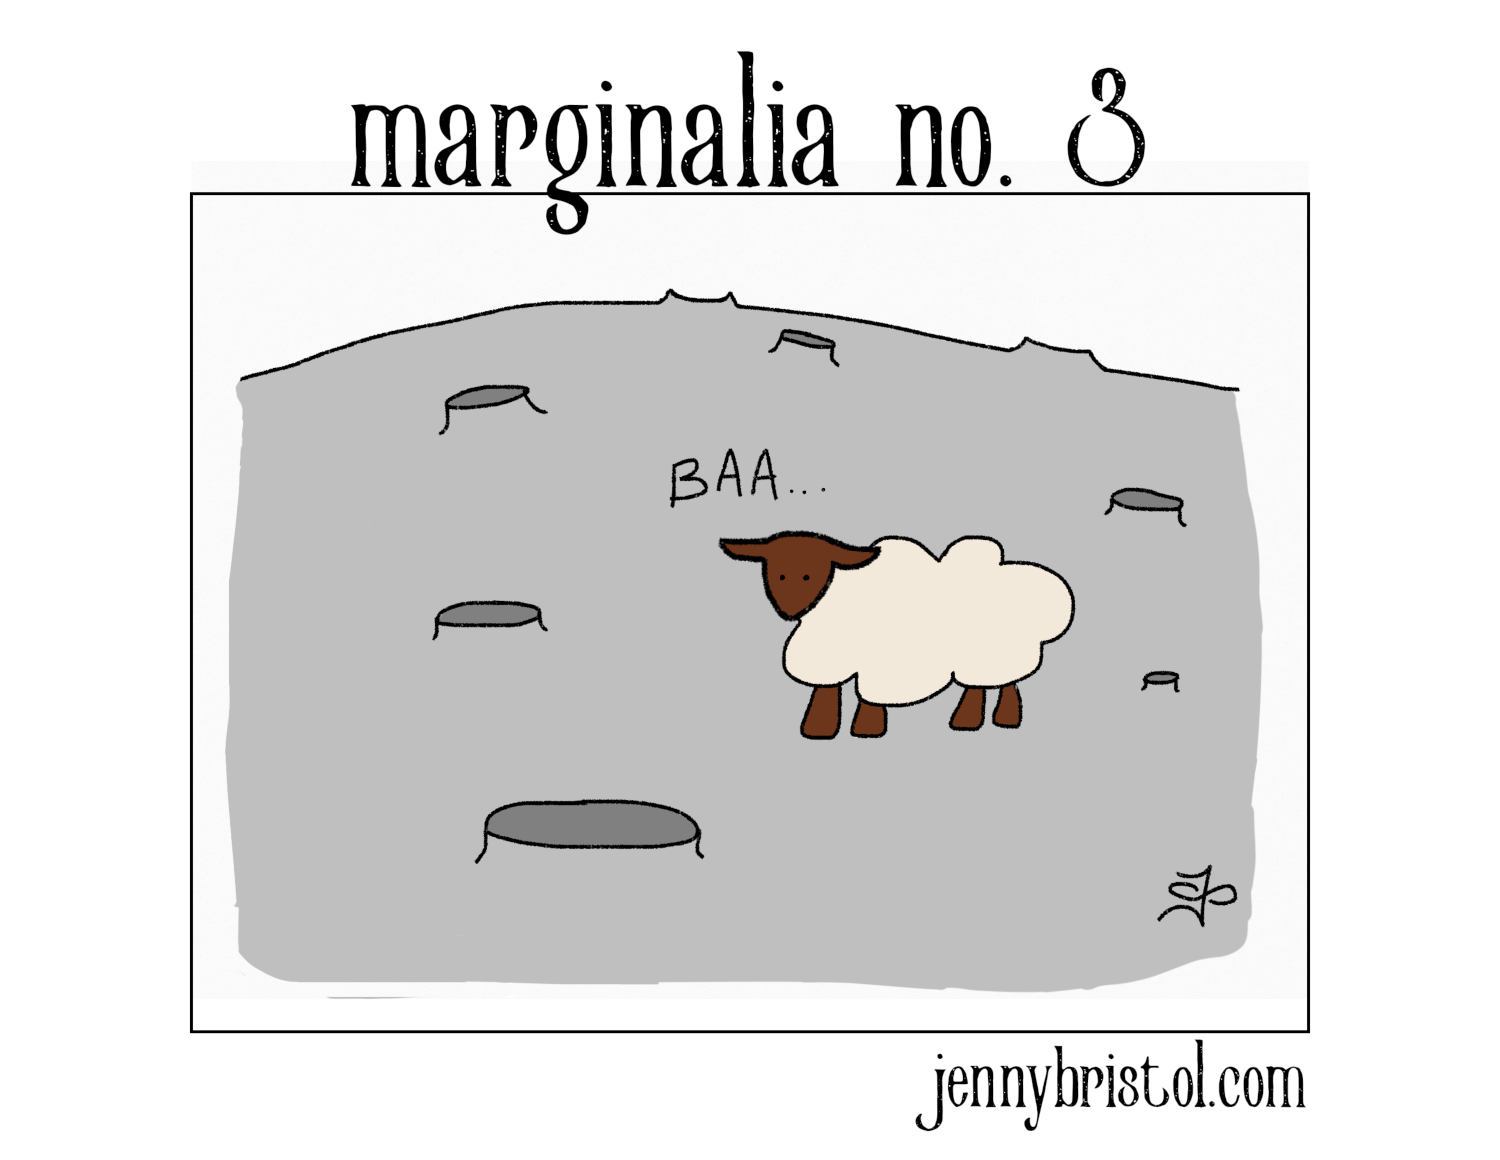 Marginalia no. 3 to post